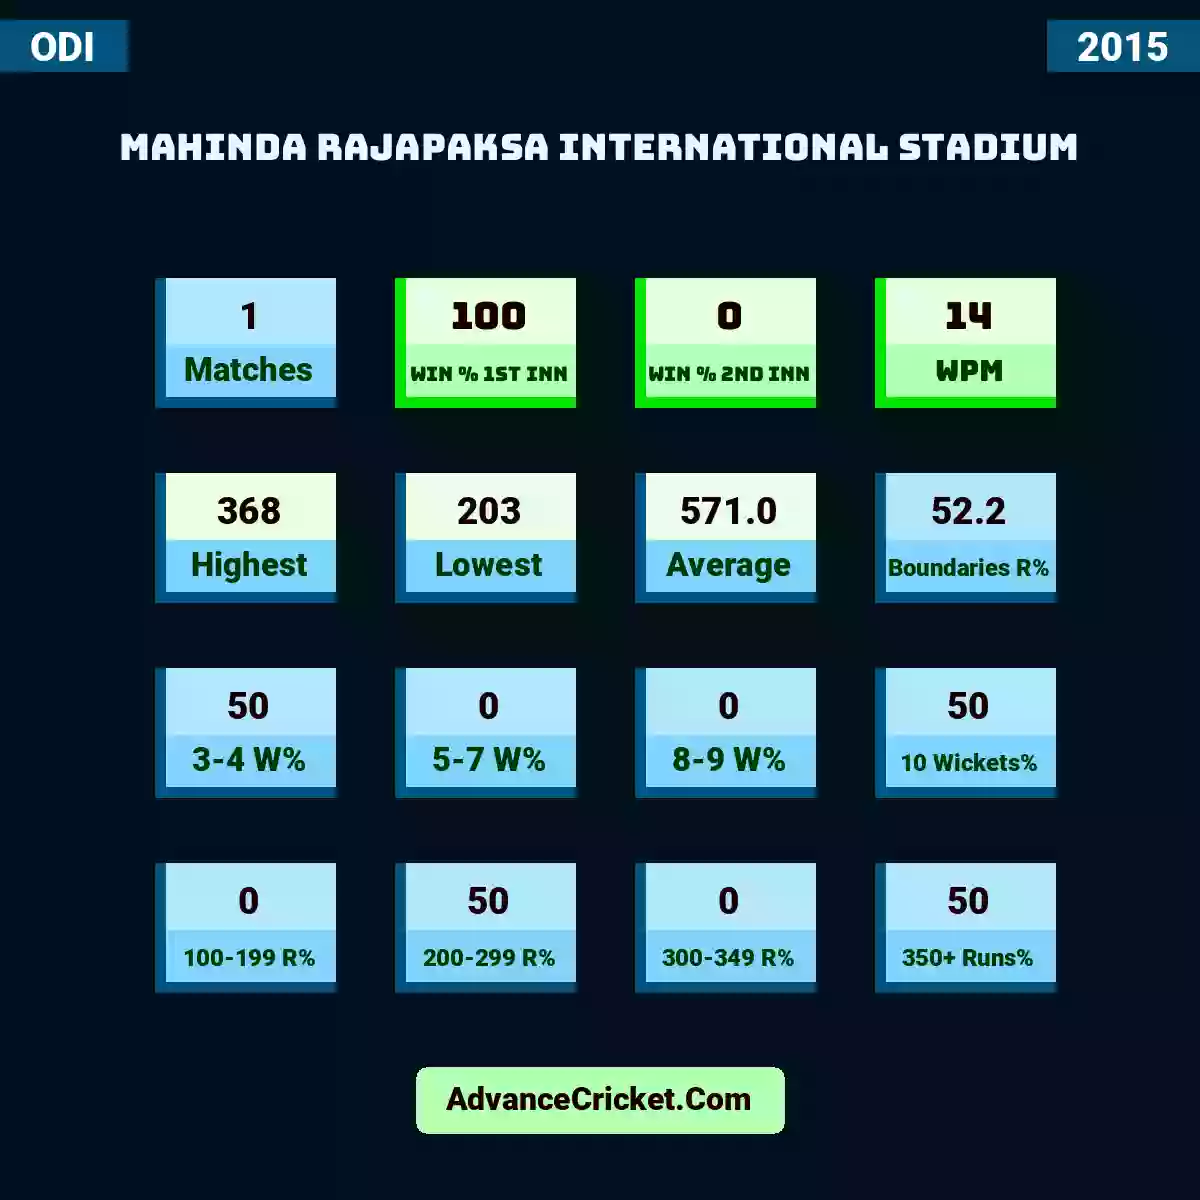 Image showing Mahinda Rajapaksa International Stadium with Matches: 1, Win % 1st Inn: 100, Win % 2nd Inn: 0, WPM: 14, Highest: 368, Lowest: 203, Average: 571.0, Boundaries R%: 52.2, 3-4 W%: 50, 5-7 W%: 0, 8-9 W%: 0, 10 Wickets%: 50, 100-199 R%: 0, 200-299 R%: 50, 300-349 R%: 0, 350+ Runs%: 50.